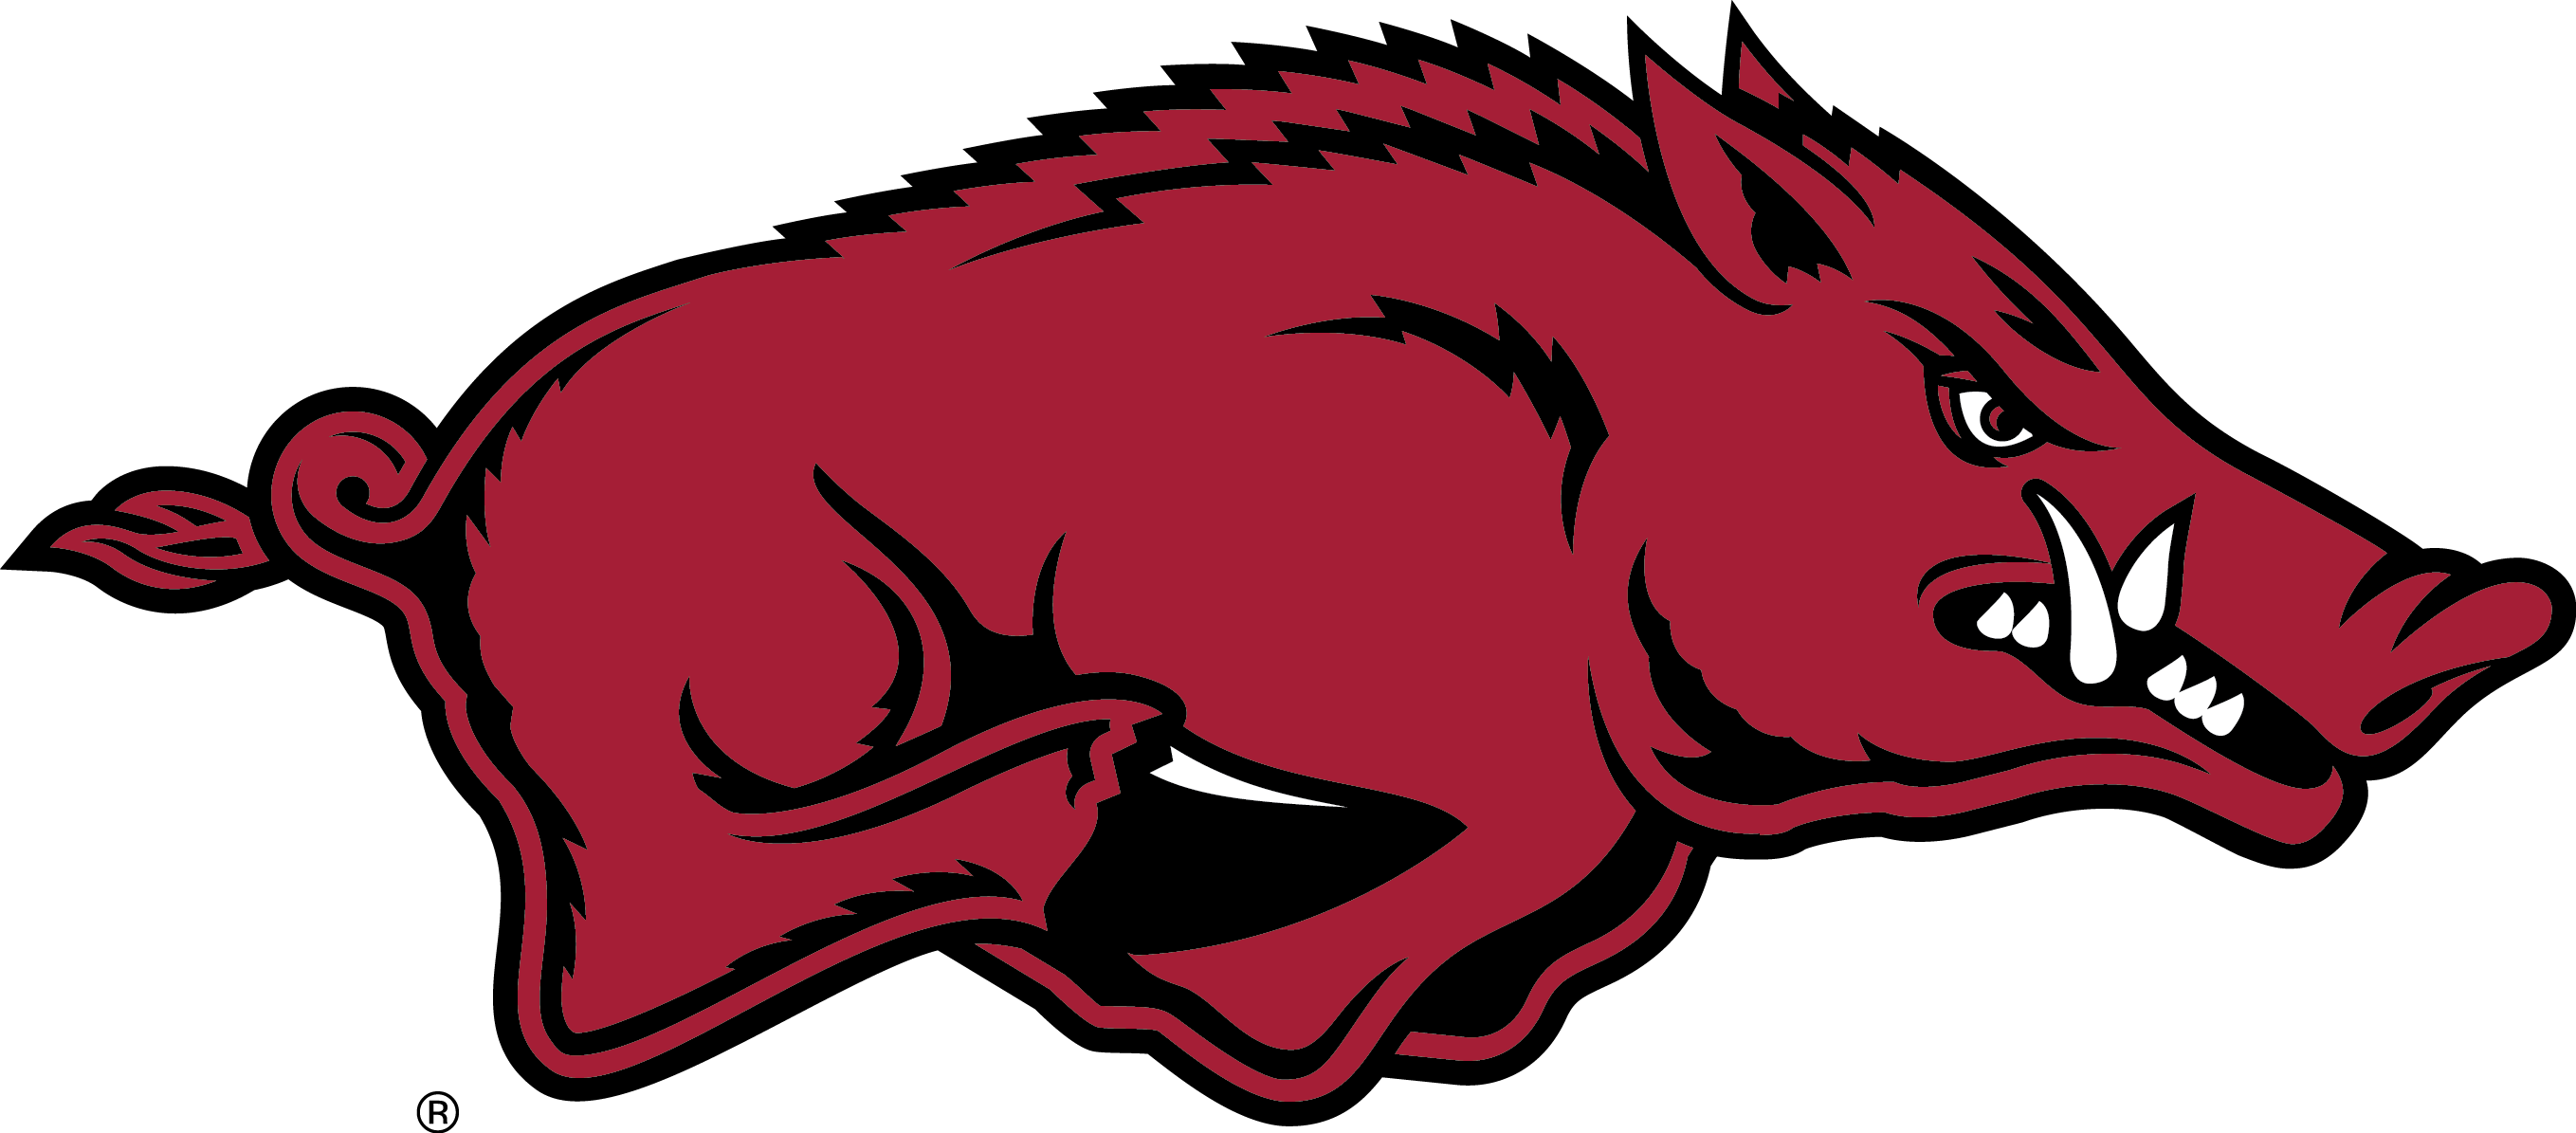 Arkansas Logo - The Razorback | Style Guides and Logos | University of Arkansas